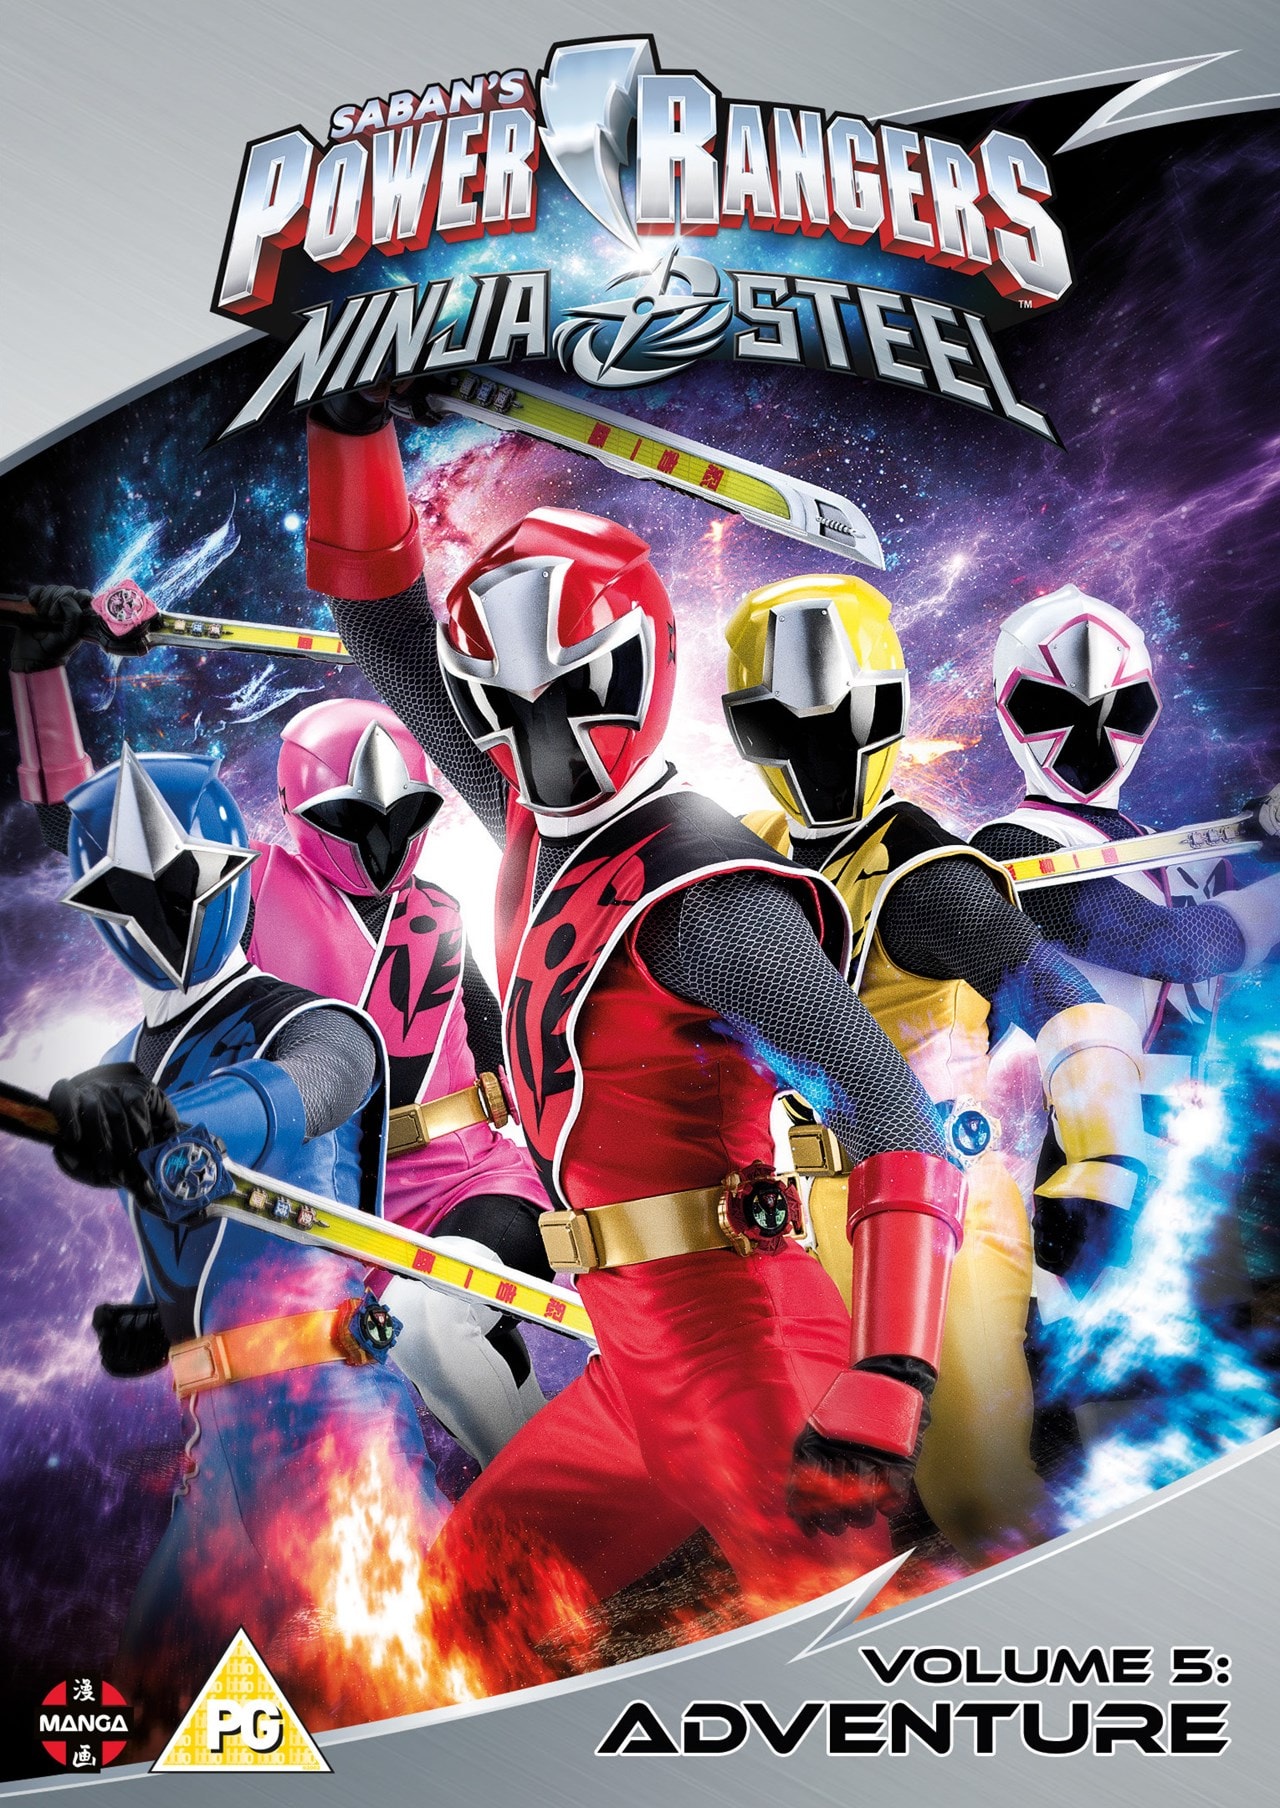 Power Rangers Ninja Steel Volume 5 Adventure DVD Free Shipping